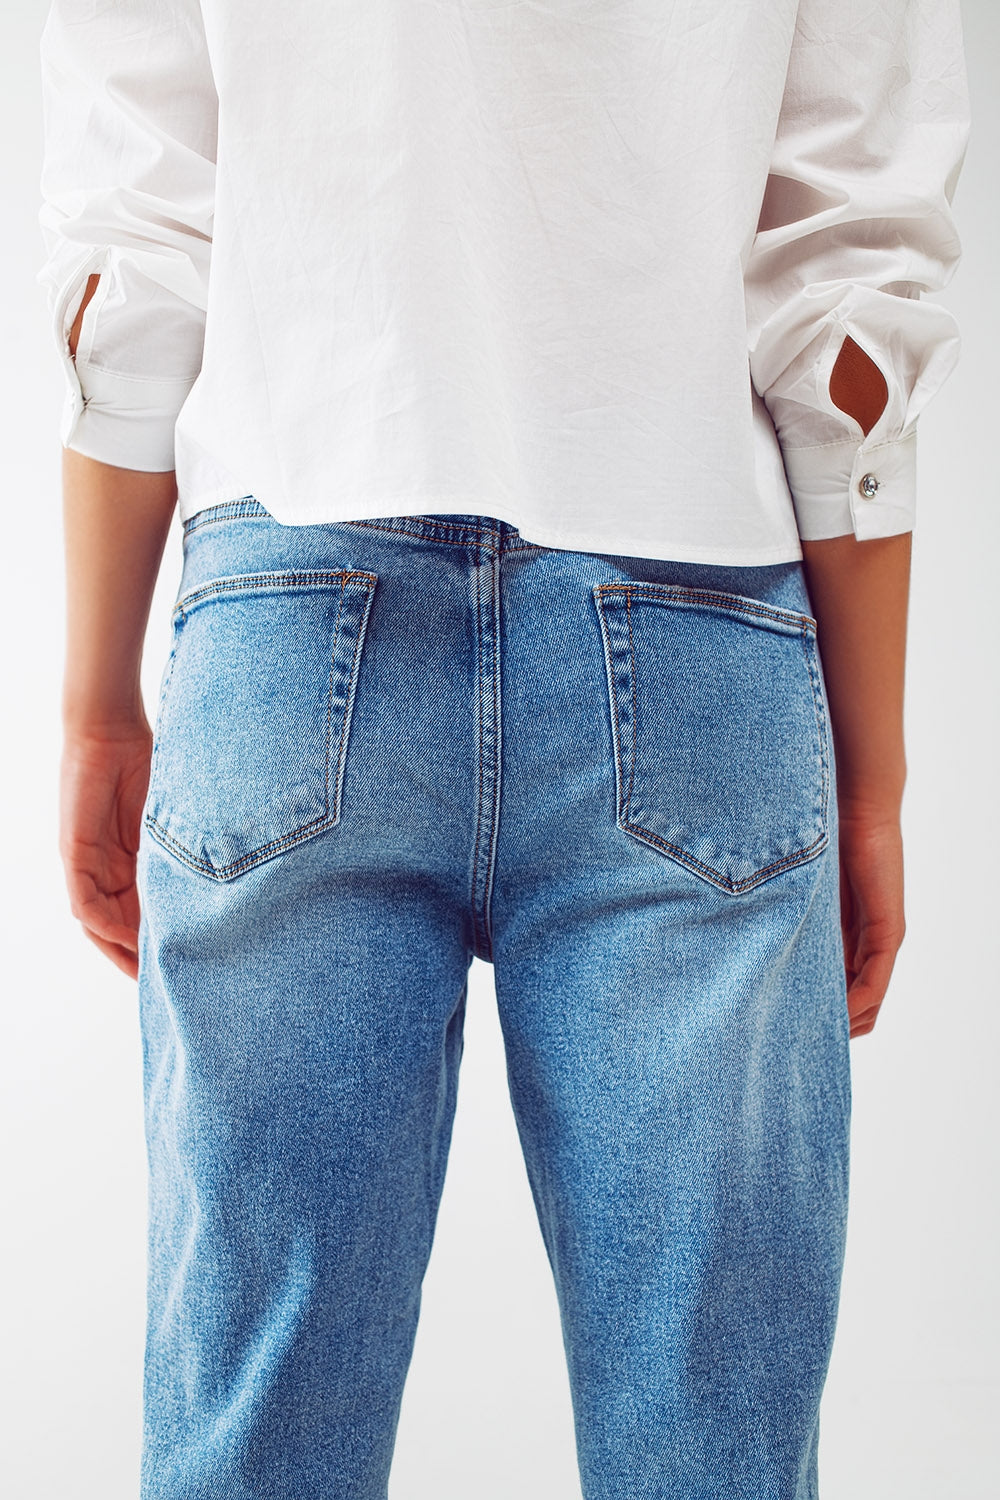 Ripped knee straight leg jeans in light blue wash - Szua Store